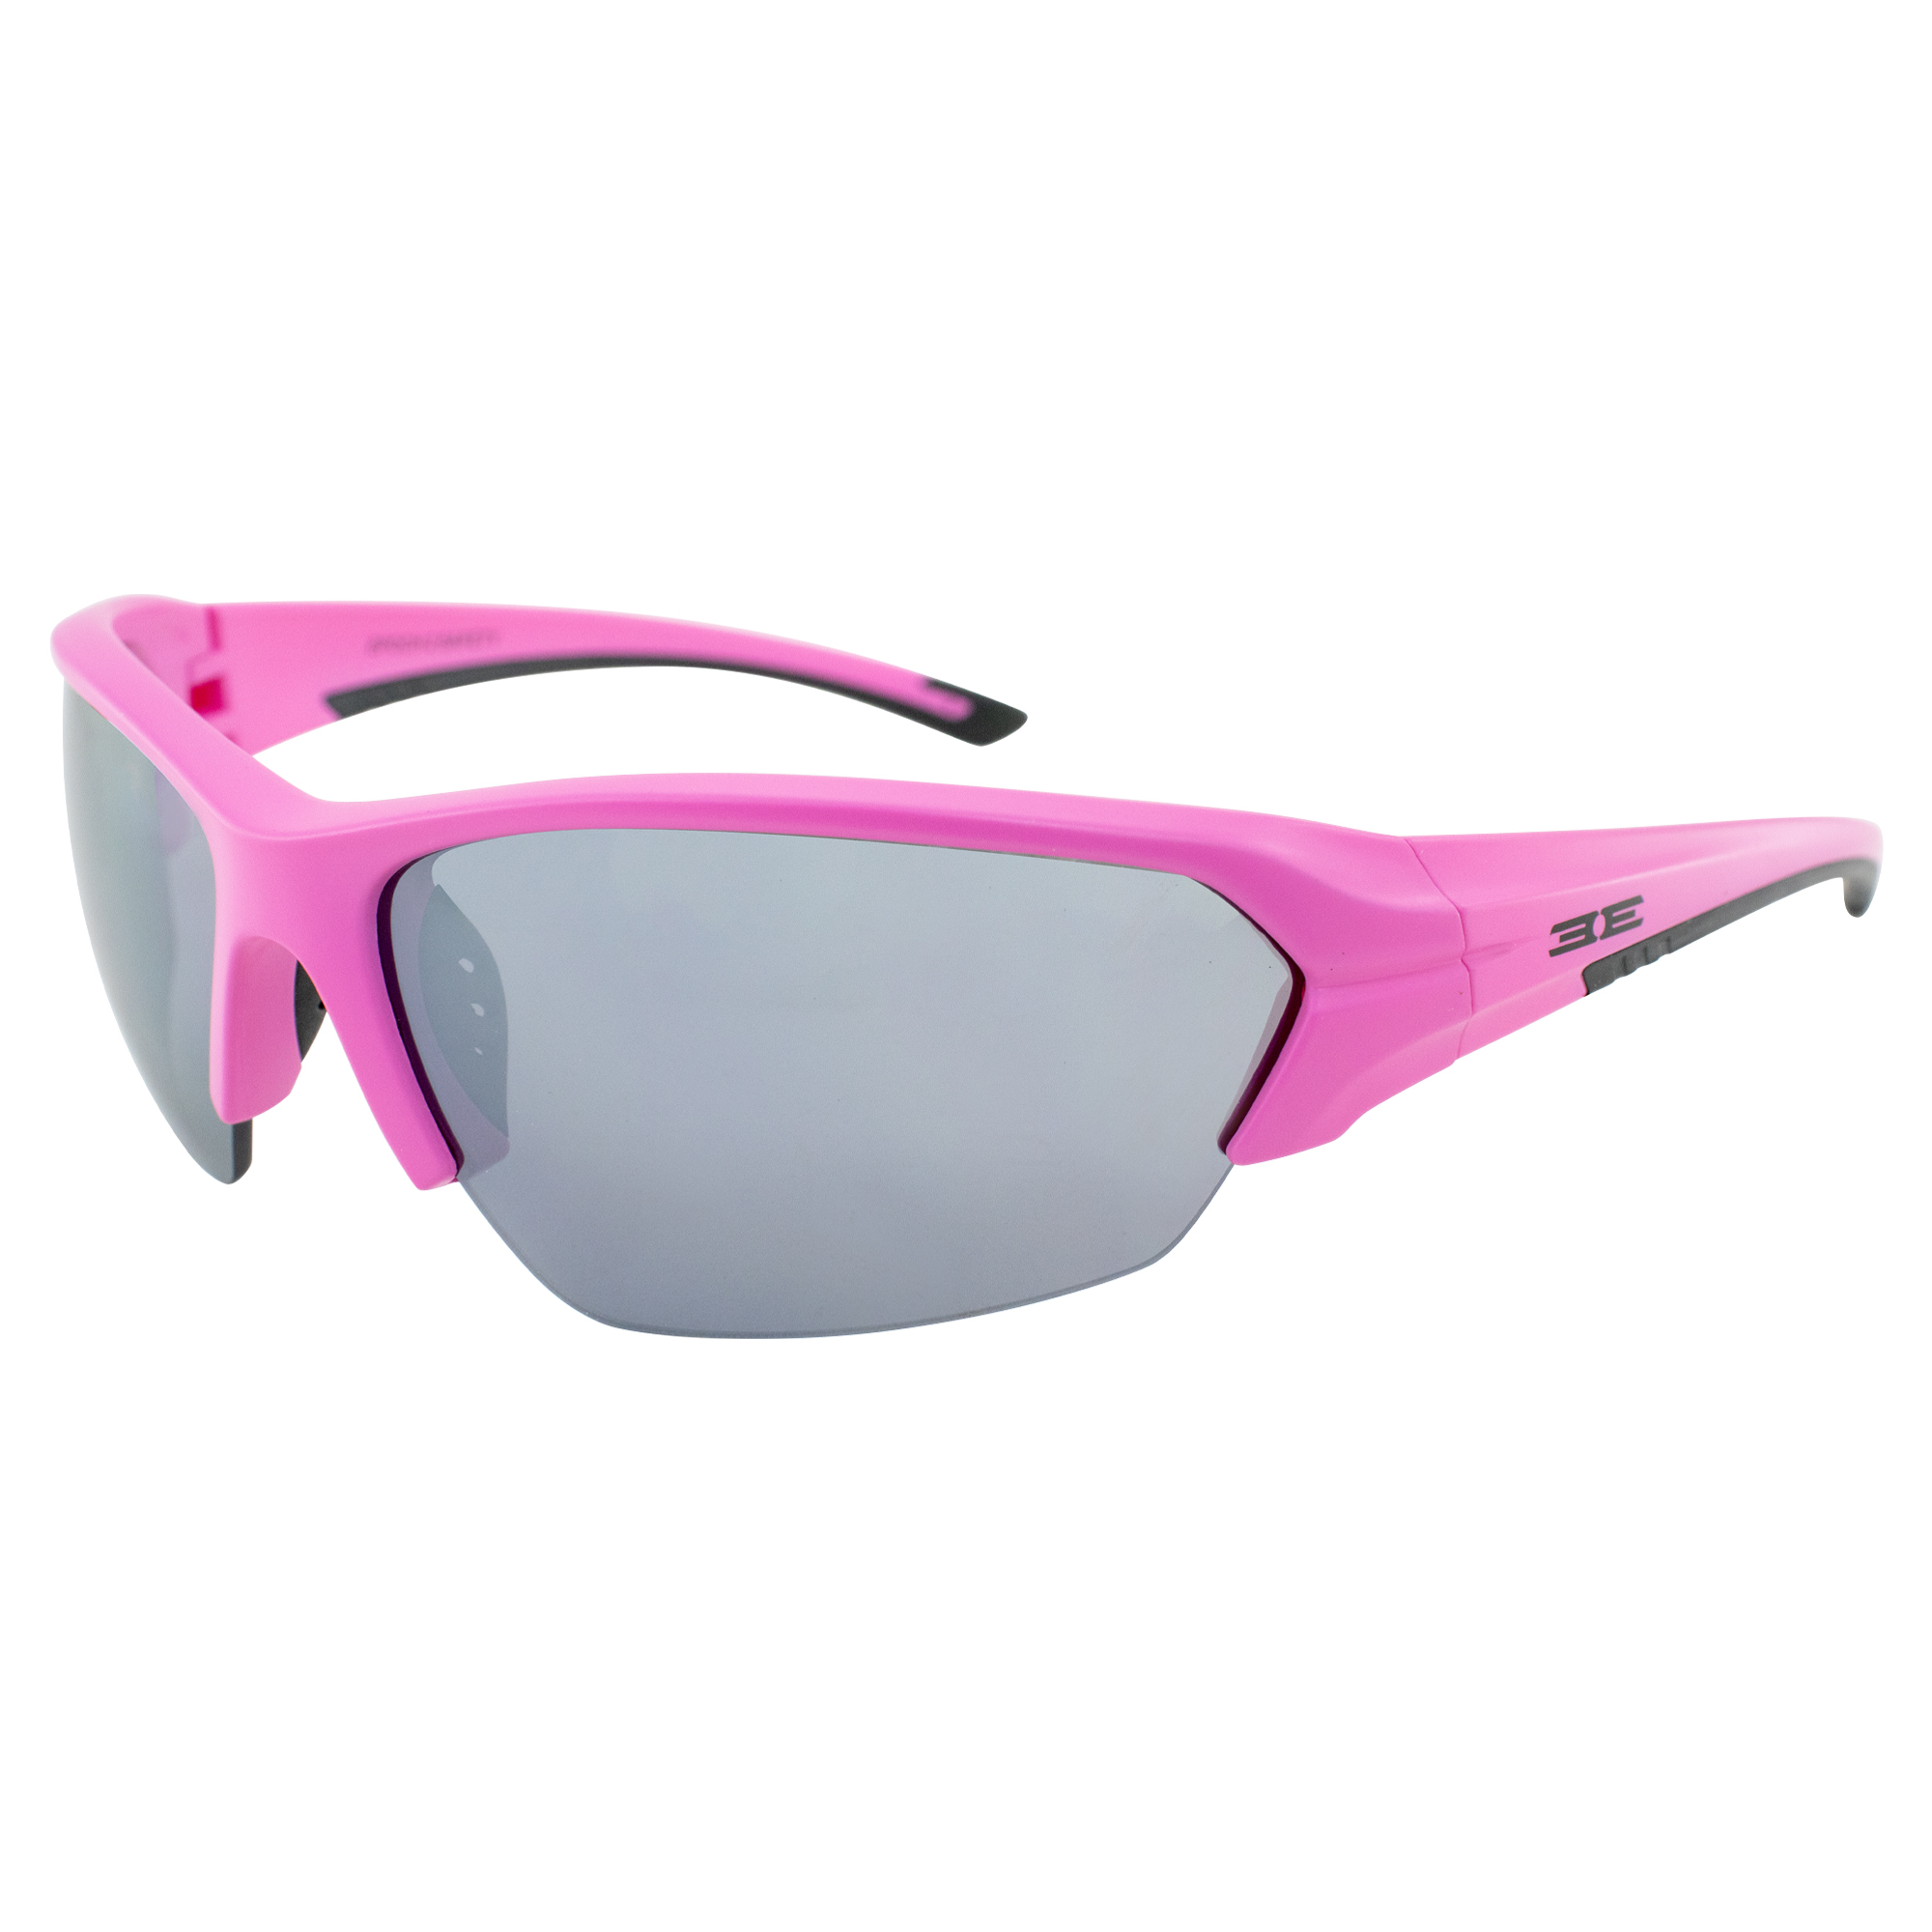 Epoch Eyewear Wake Sunglasses Style Pink with Smoke Lens - image 1 of 8